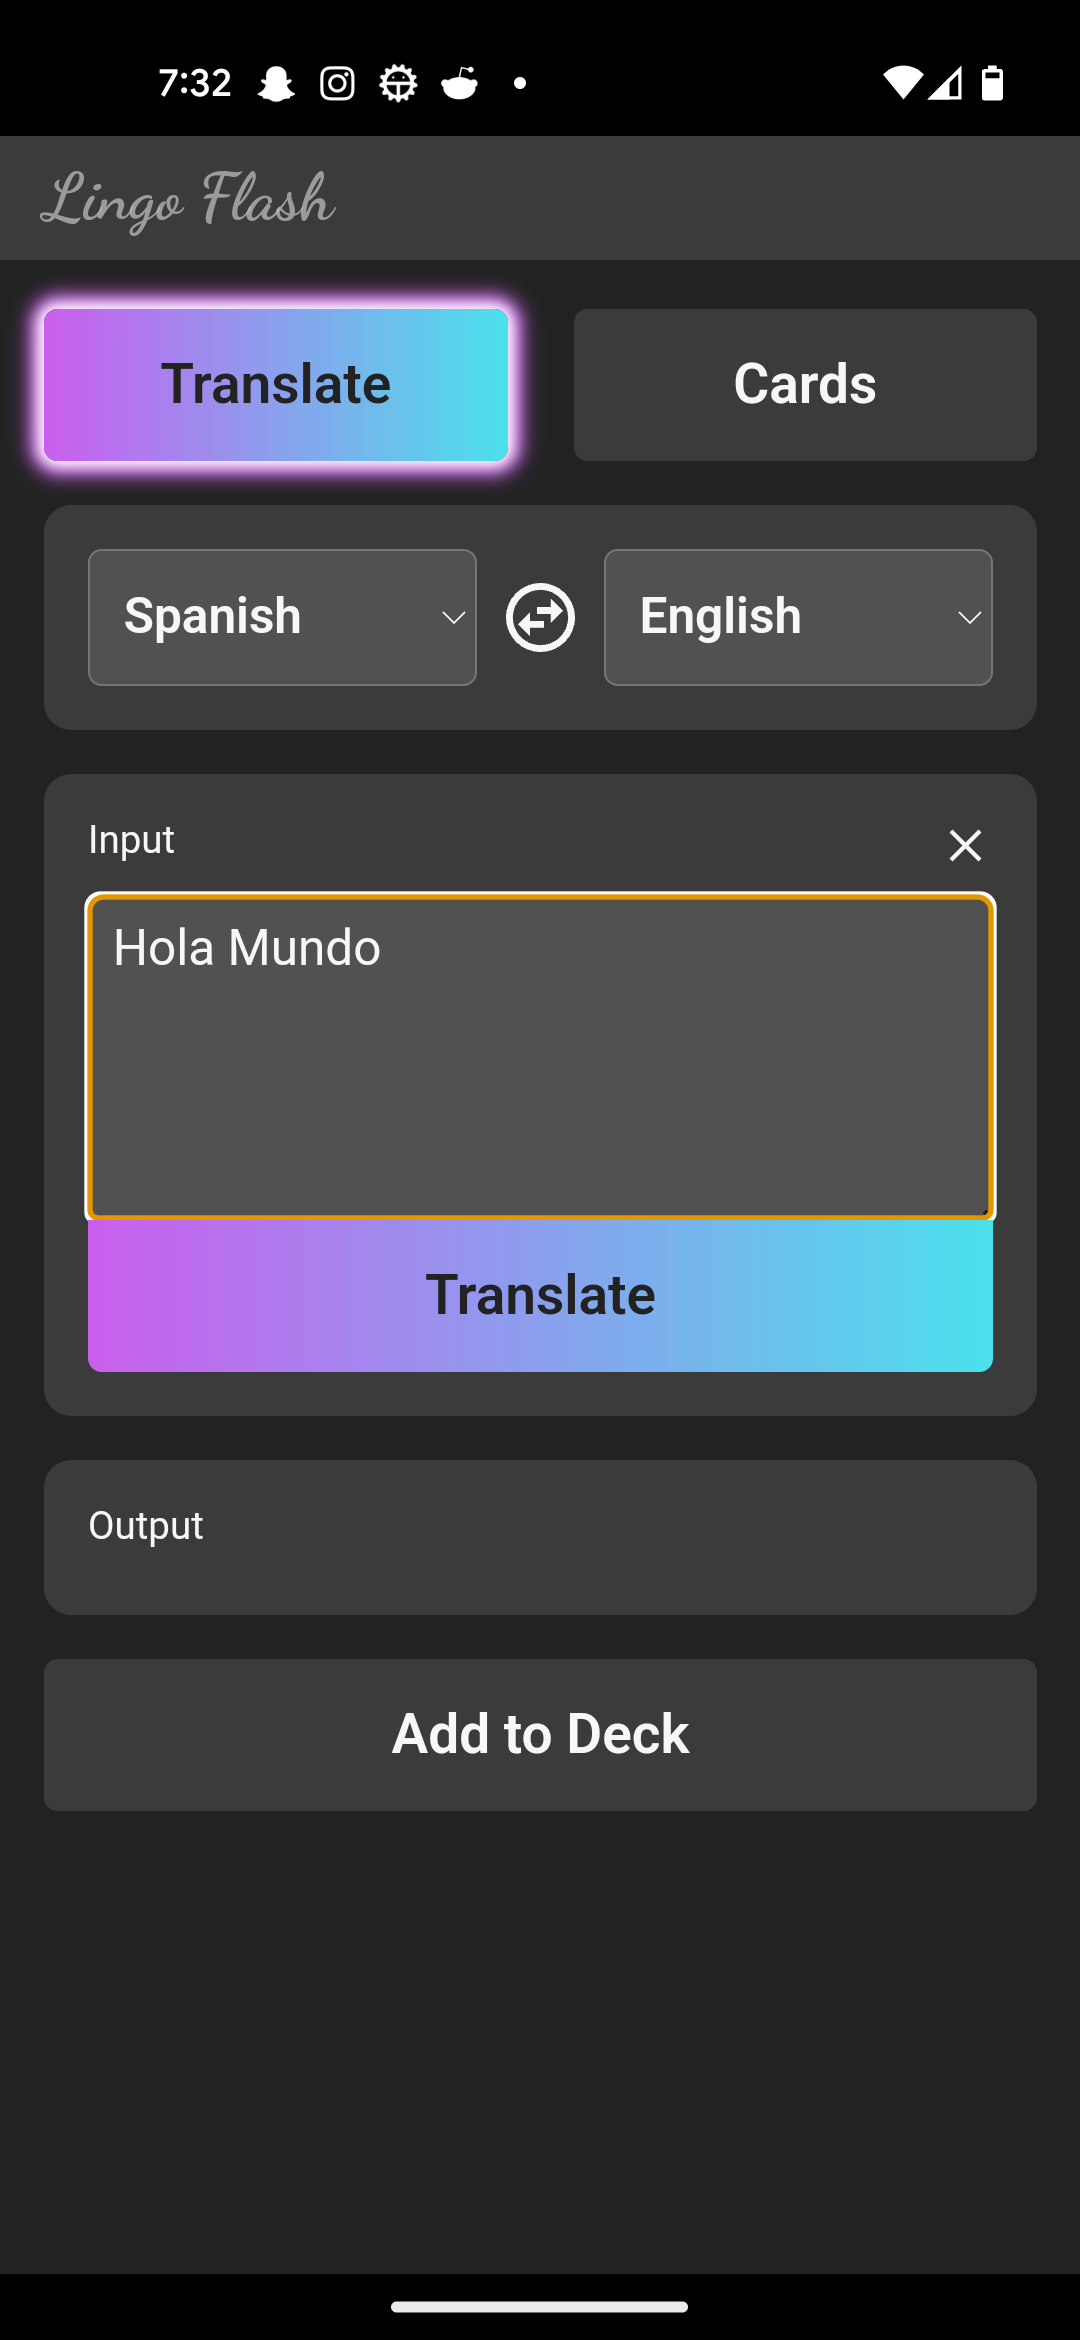 Lingo Flash Main Page